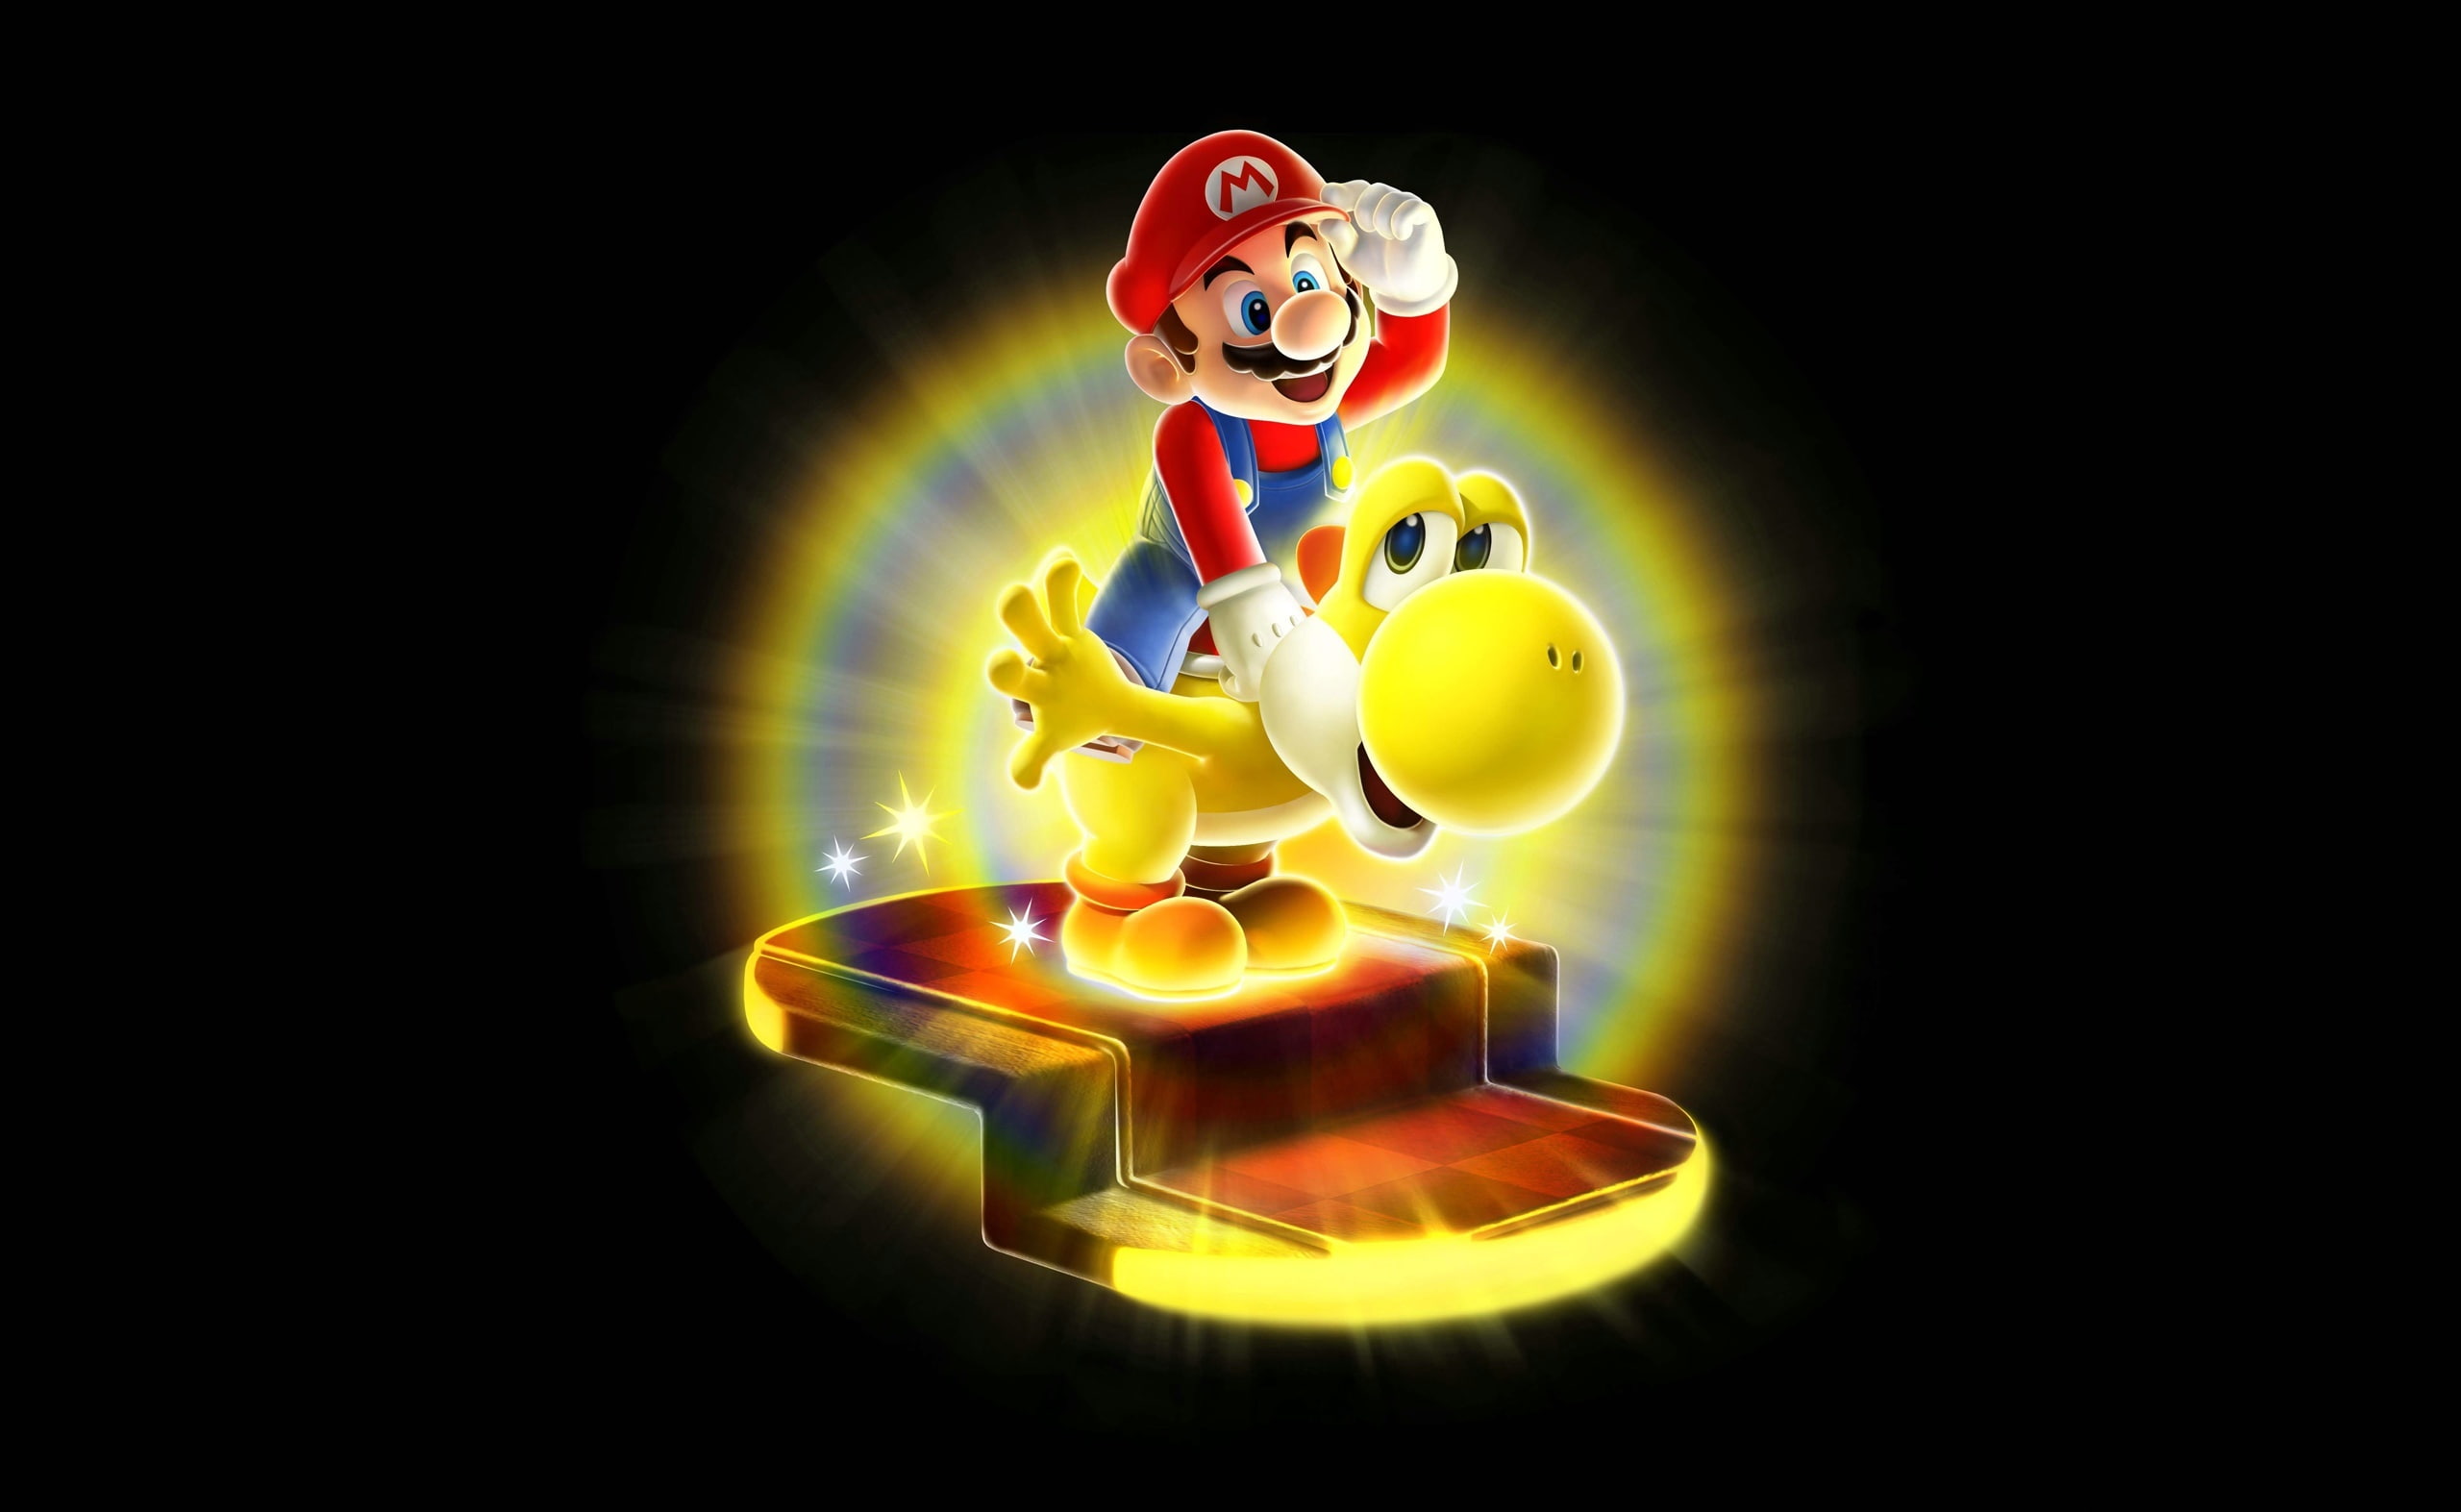 Super Mario Galaxy 2, golden Yoshi and Super Mario illustration